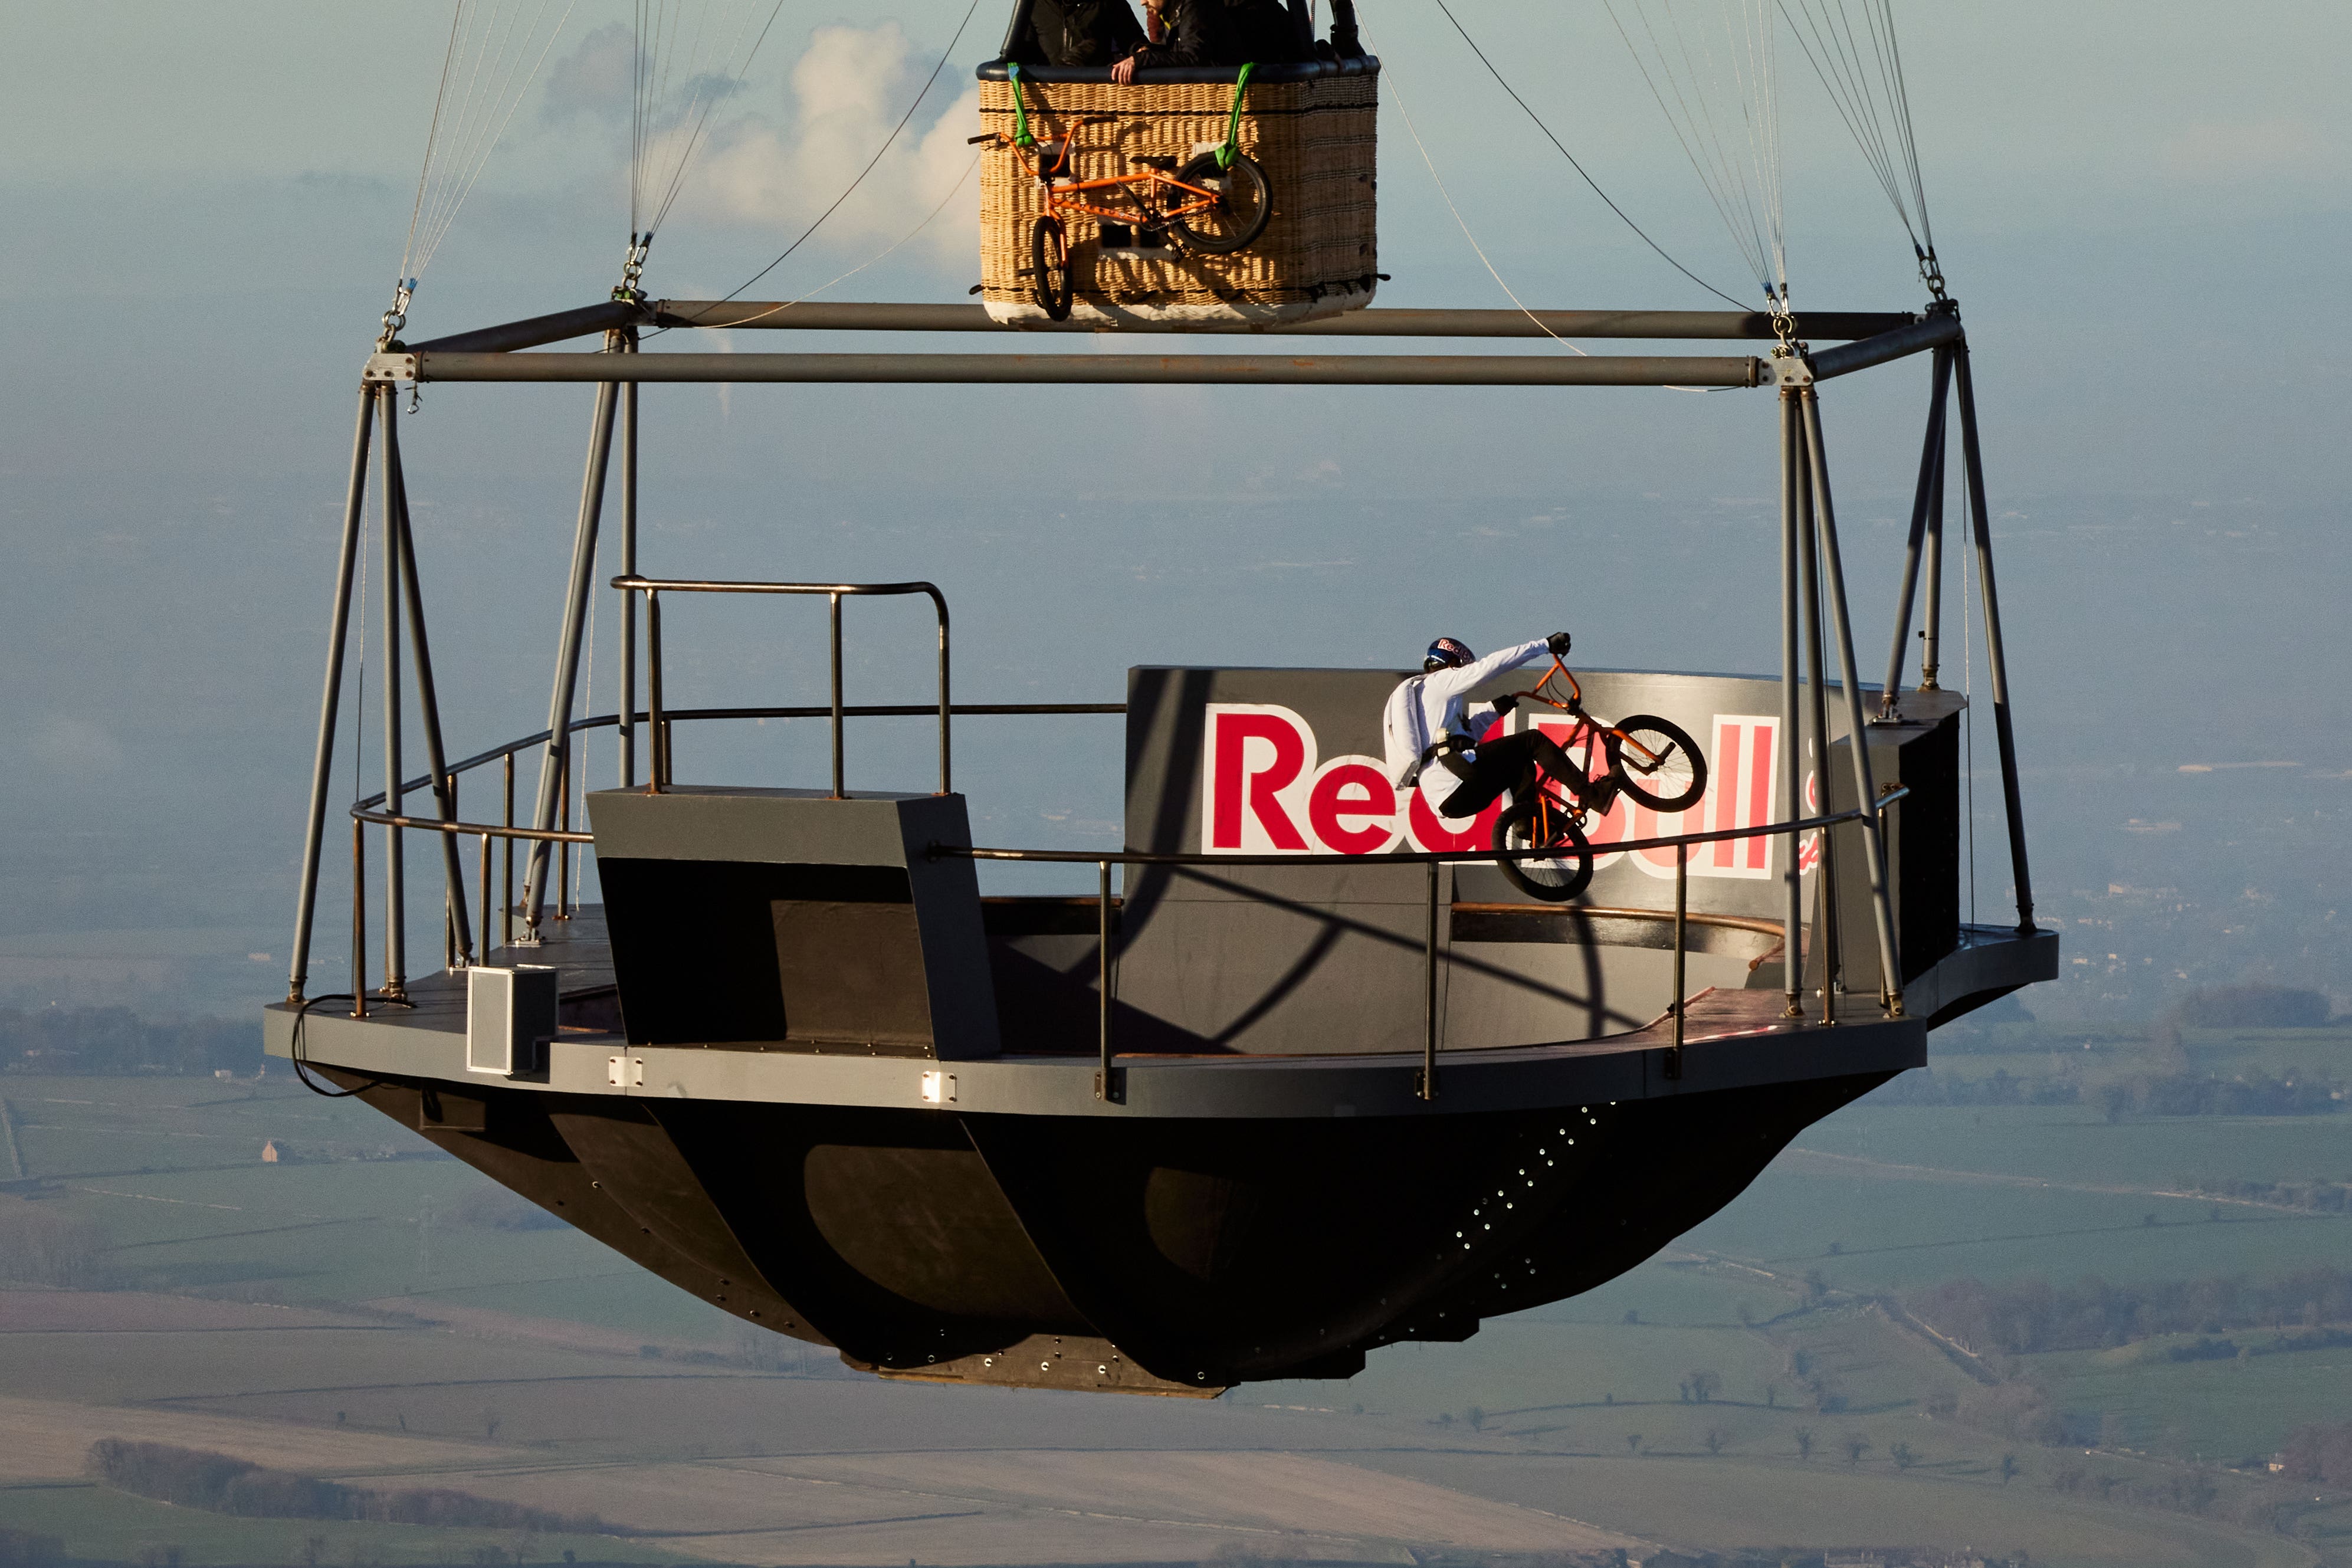 BMX rider performs tricks on surreal floating skatepark 2,000 feet up The Independent image